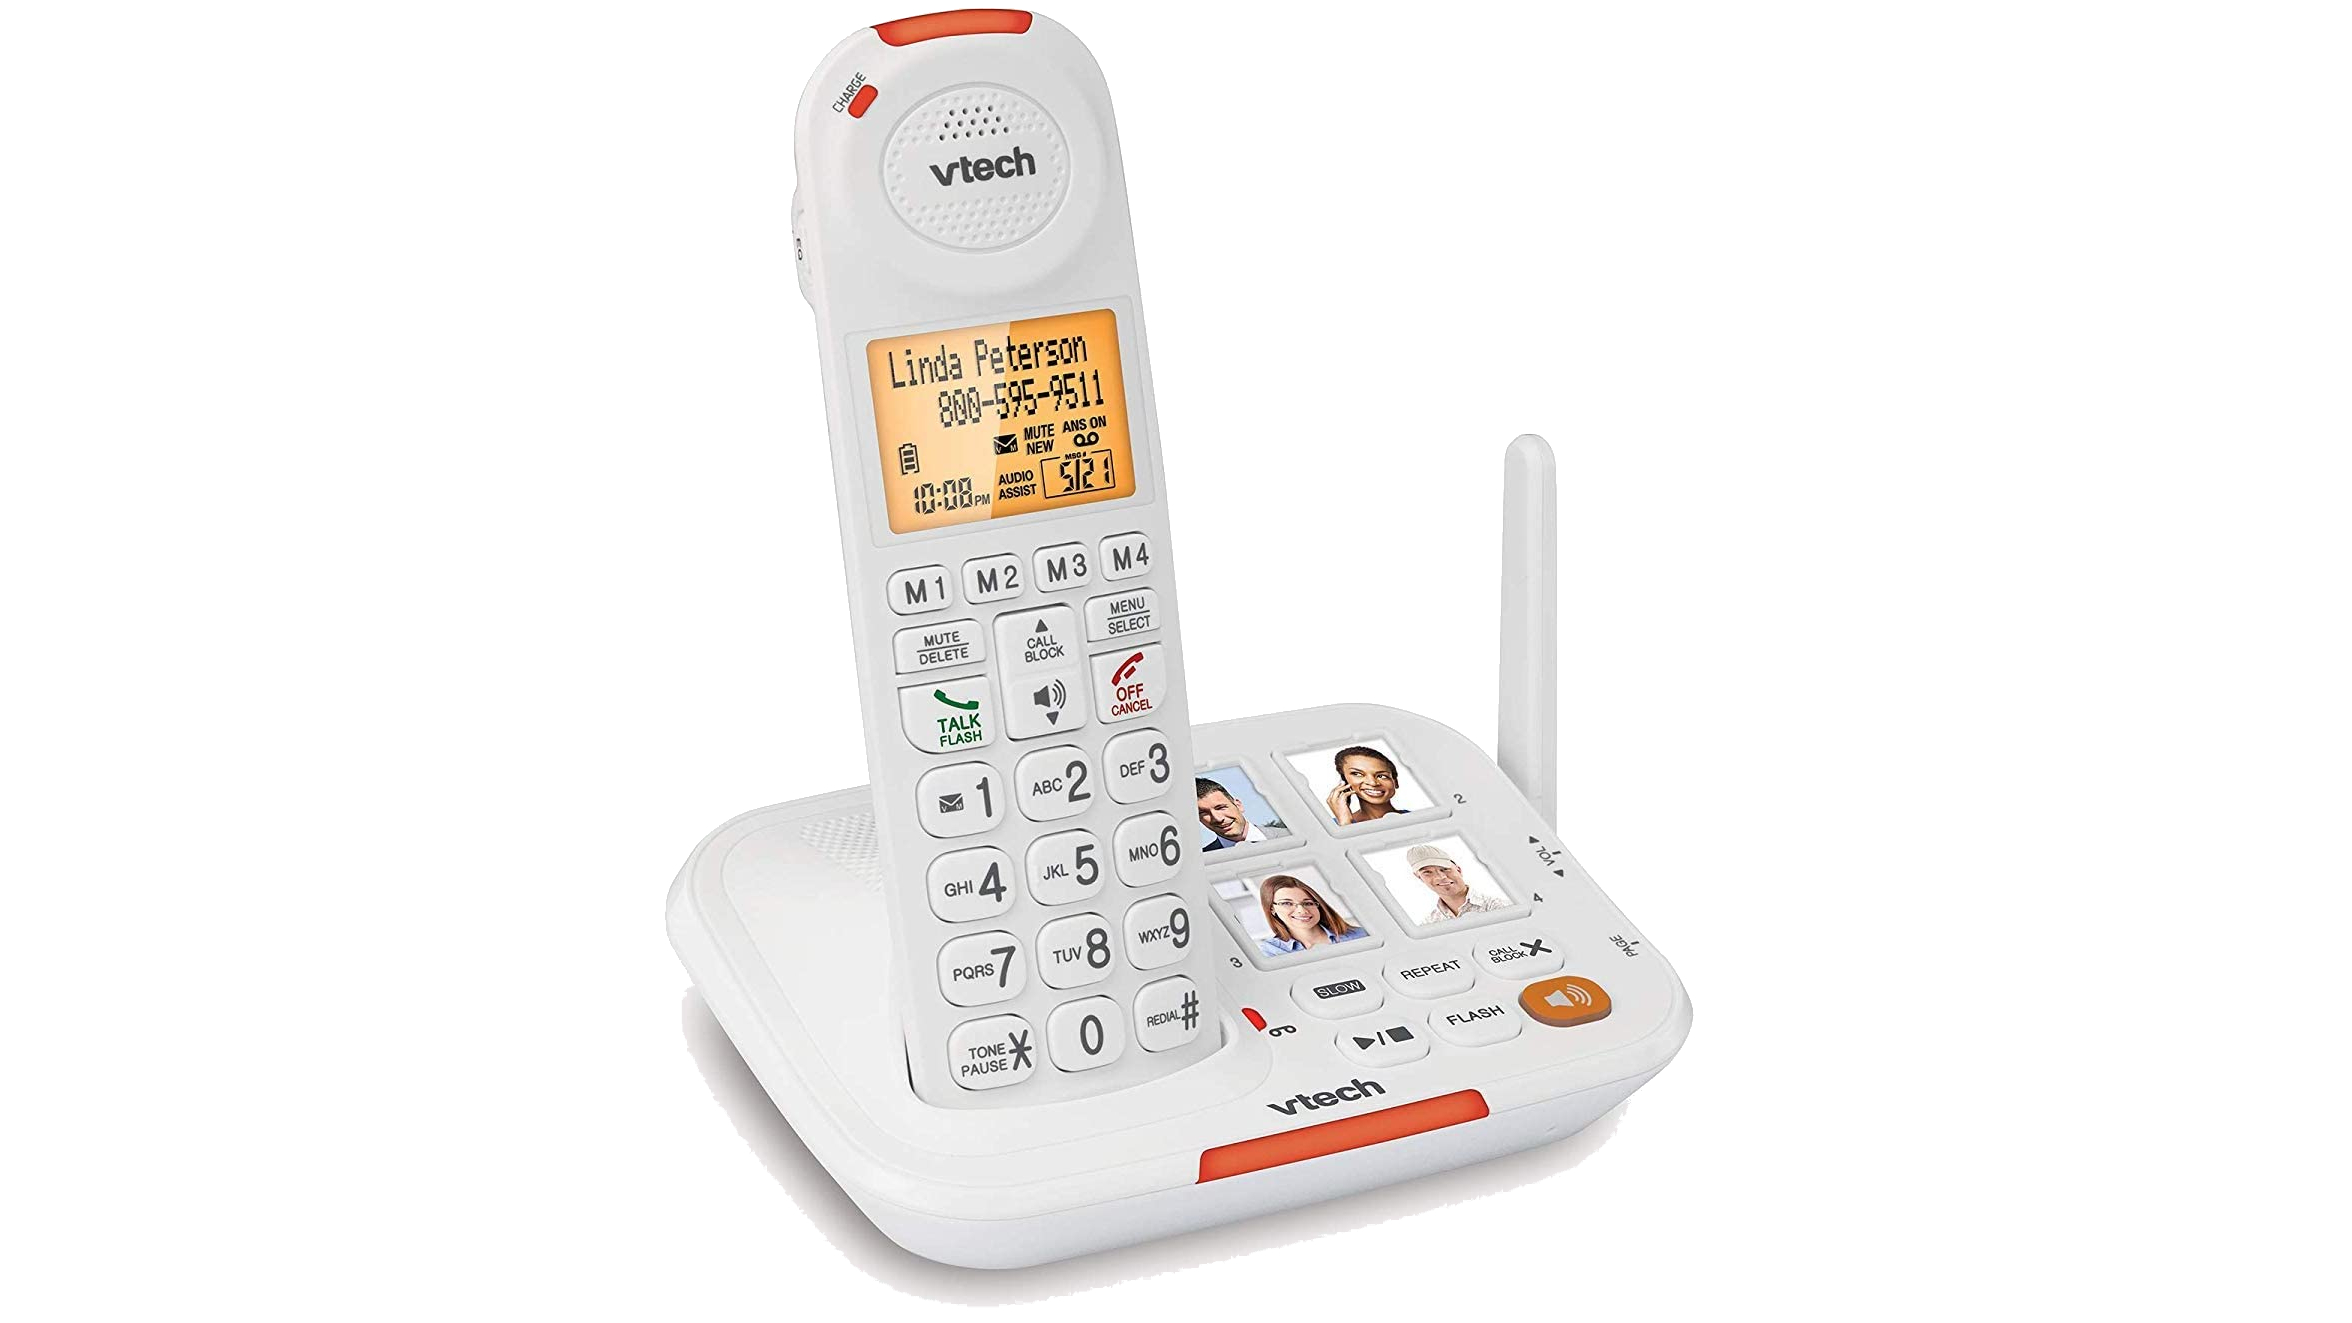 VTech SN5127 cordless phone